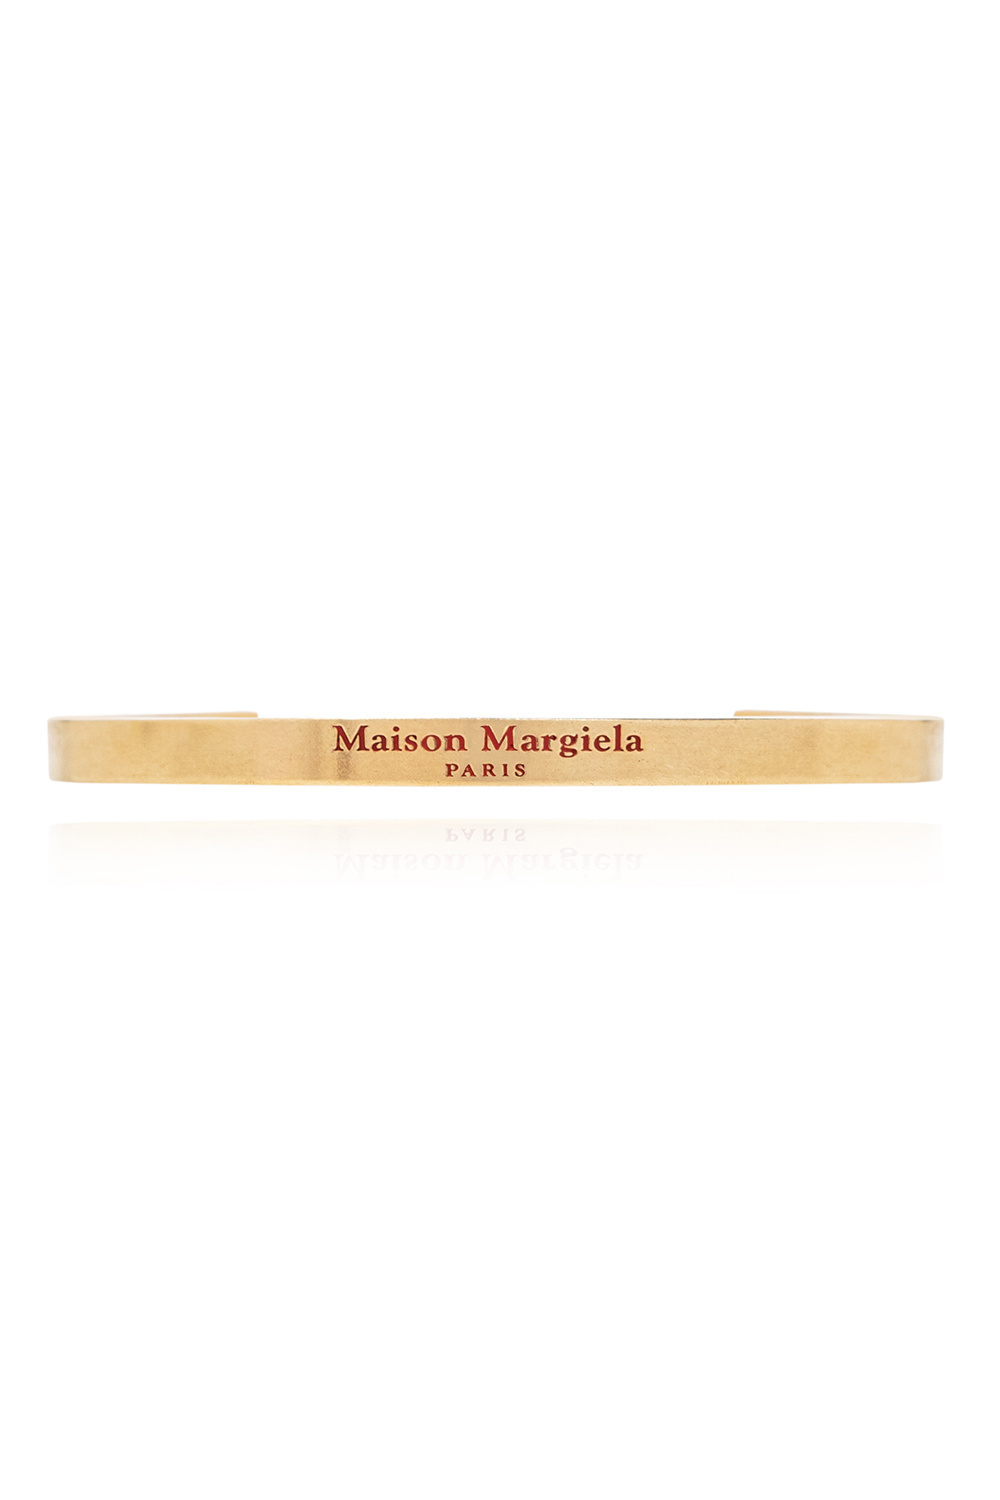 Maison Margiela that redefines luxury